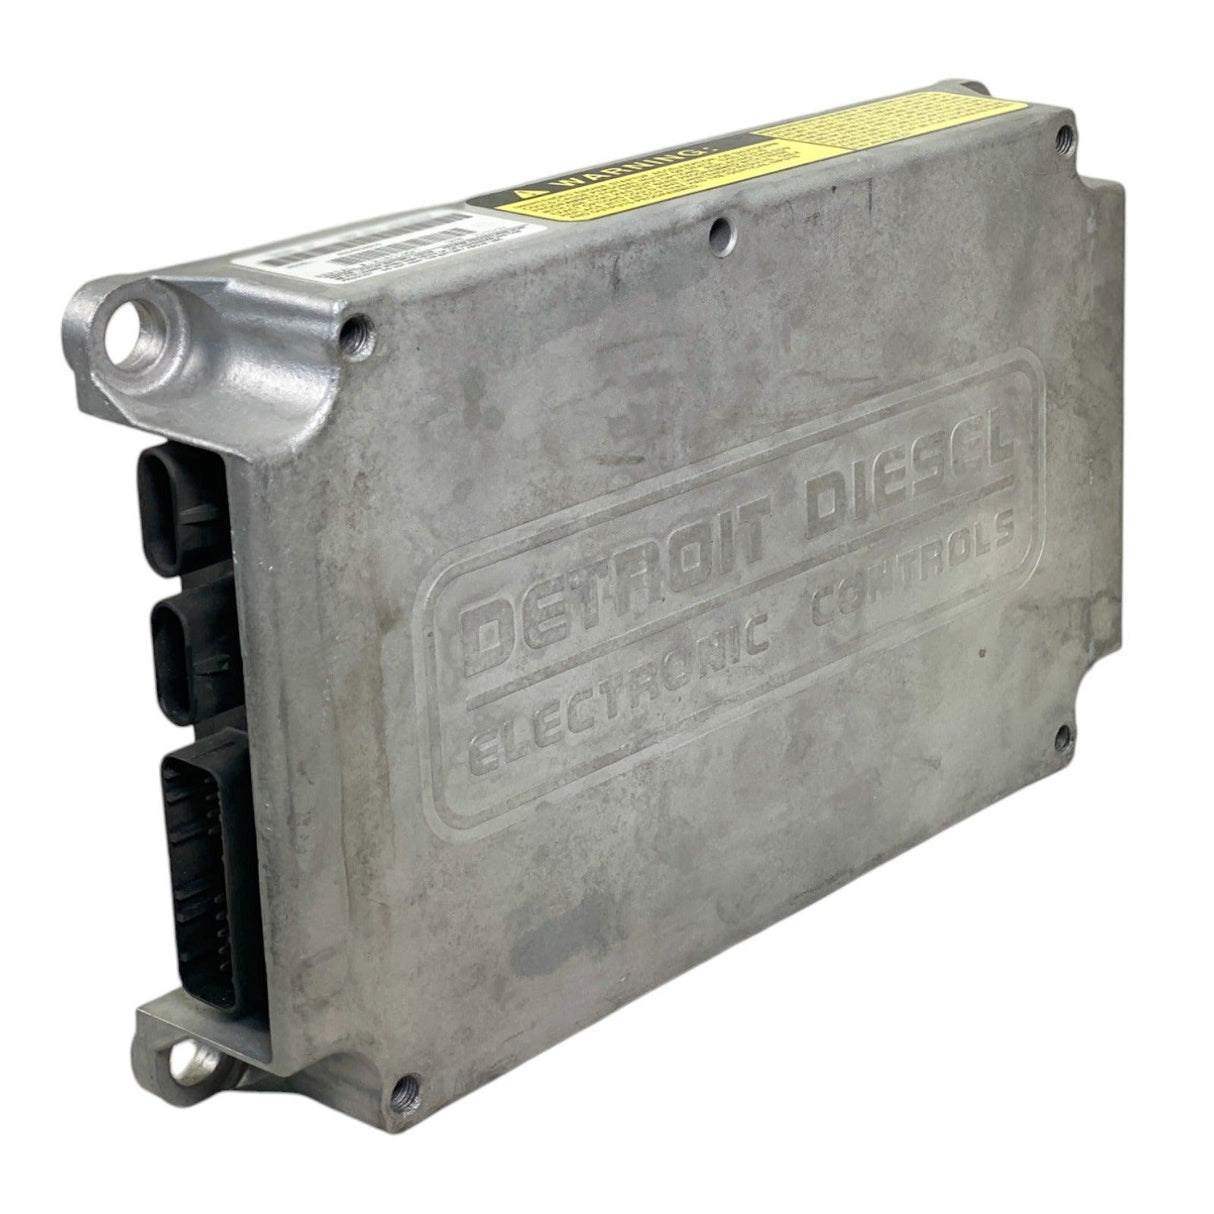 R23519308 Genuine Detroit Diesel Ecm Engine Control Module For 50/60 - Truck To Trailer